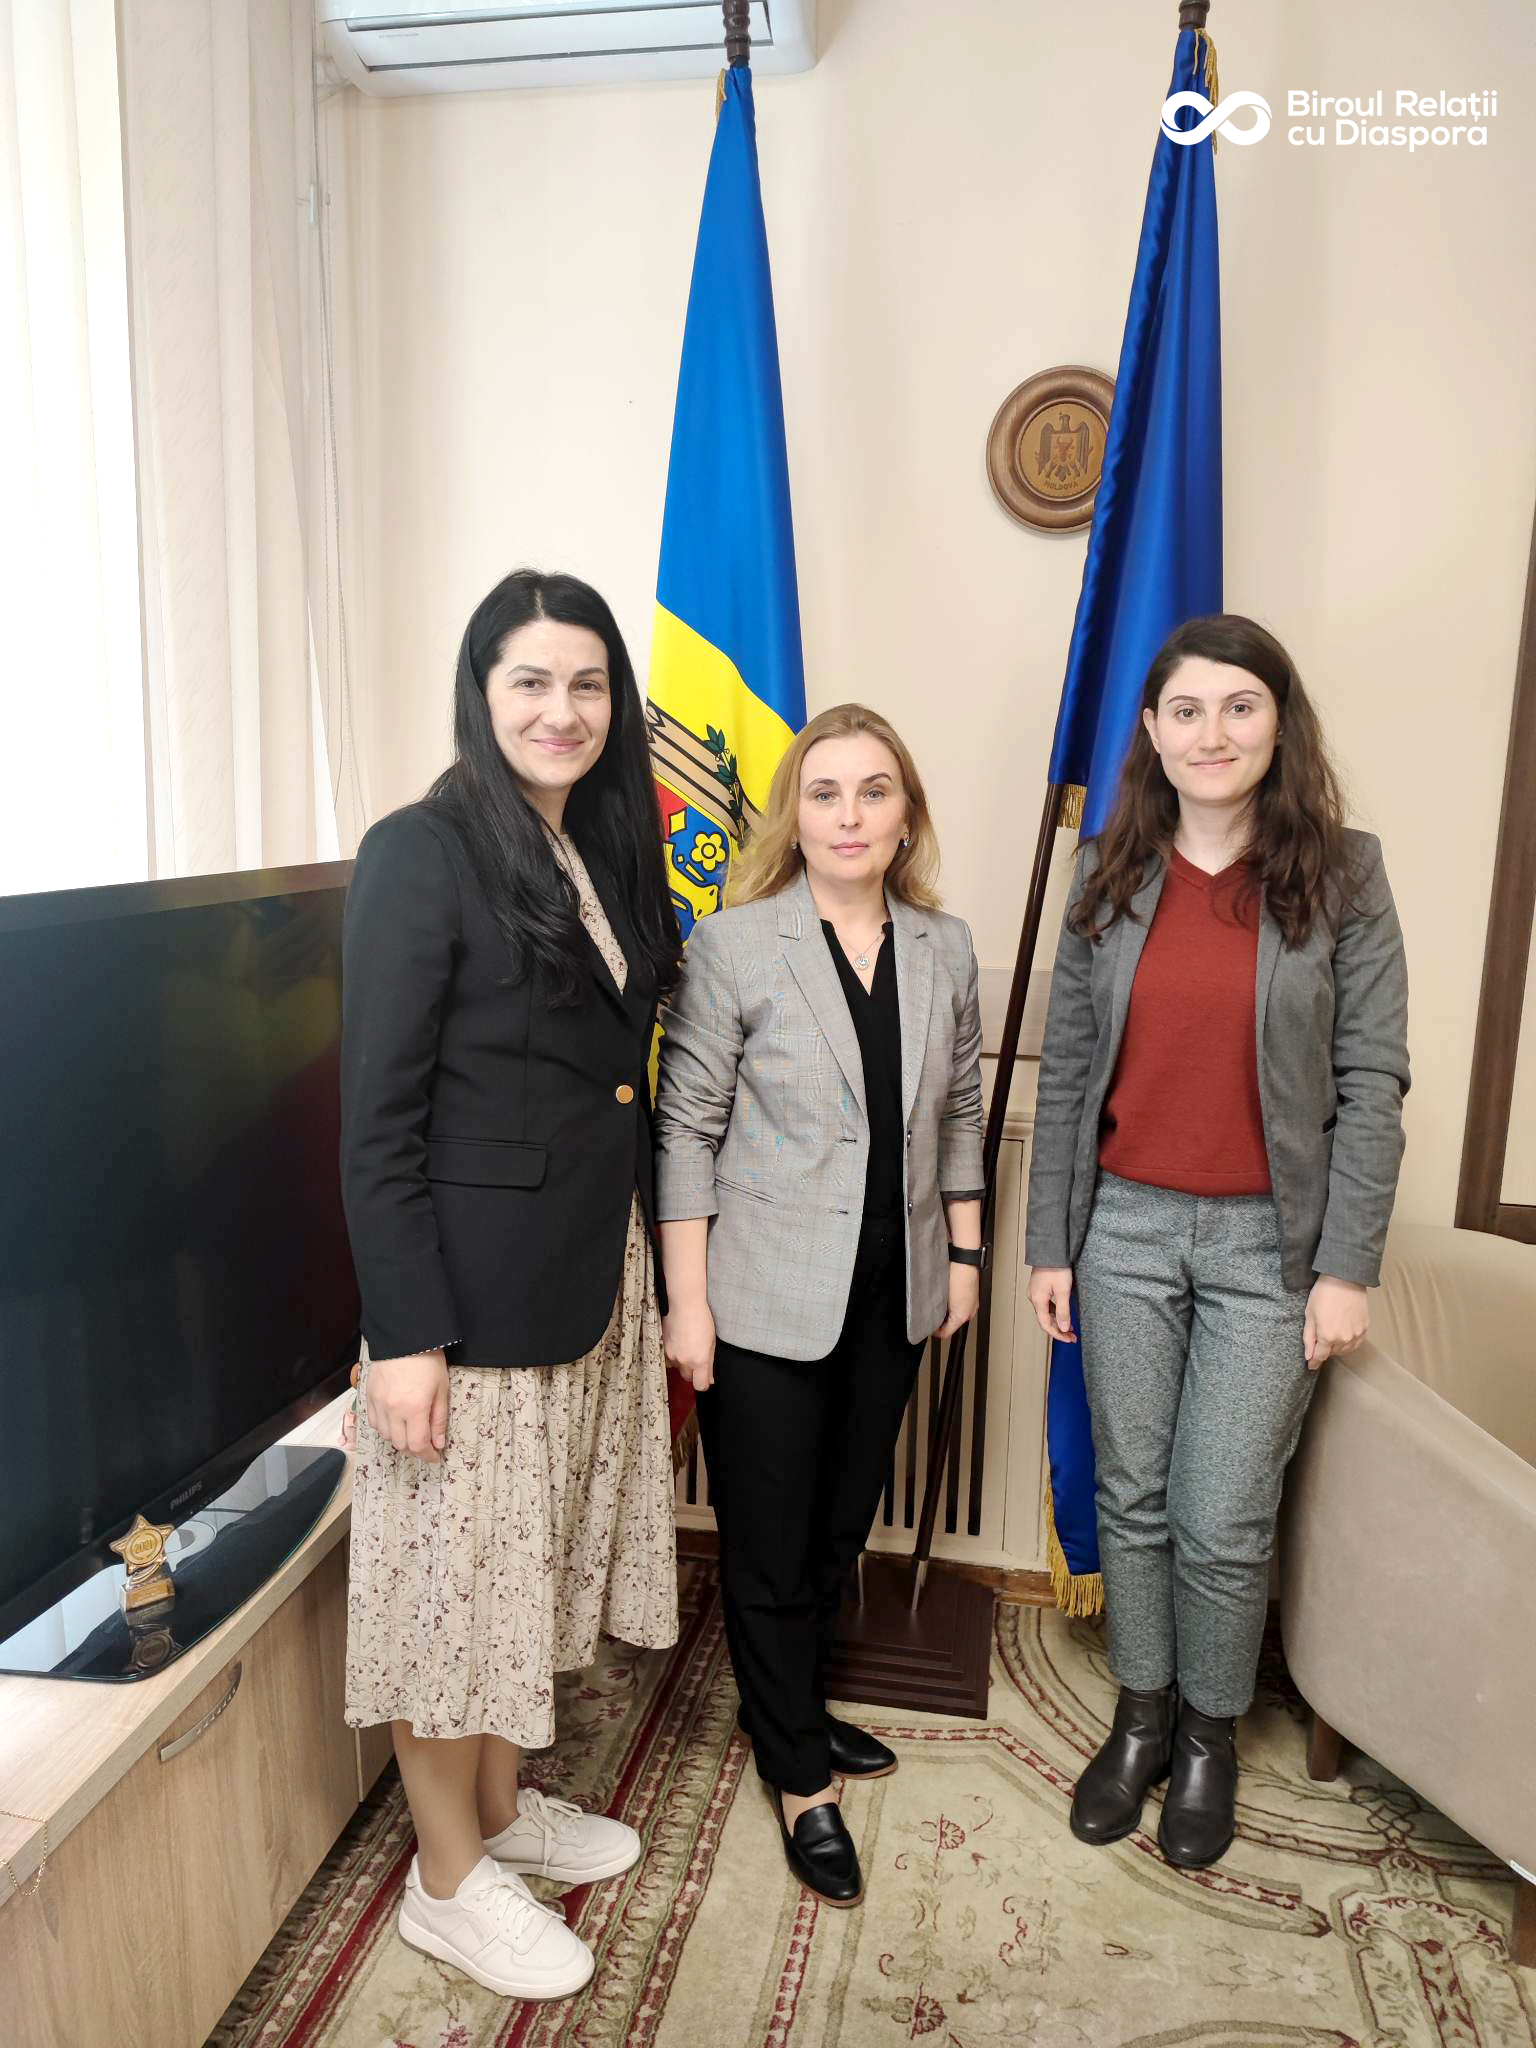 Veronica Crețu, expert in the field of Good Governance, established in Austria, visited the Diaspora Relations Bureau